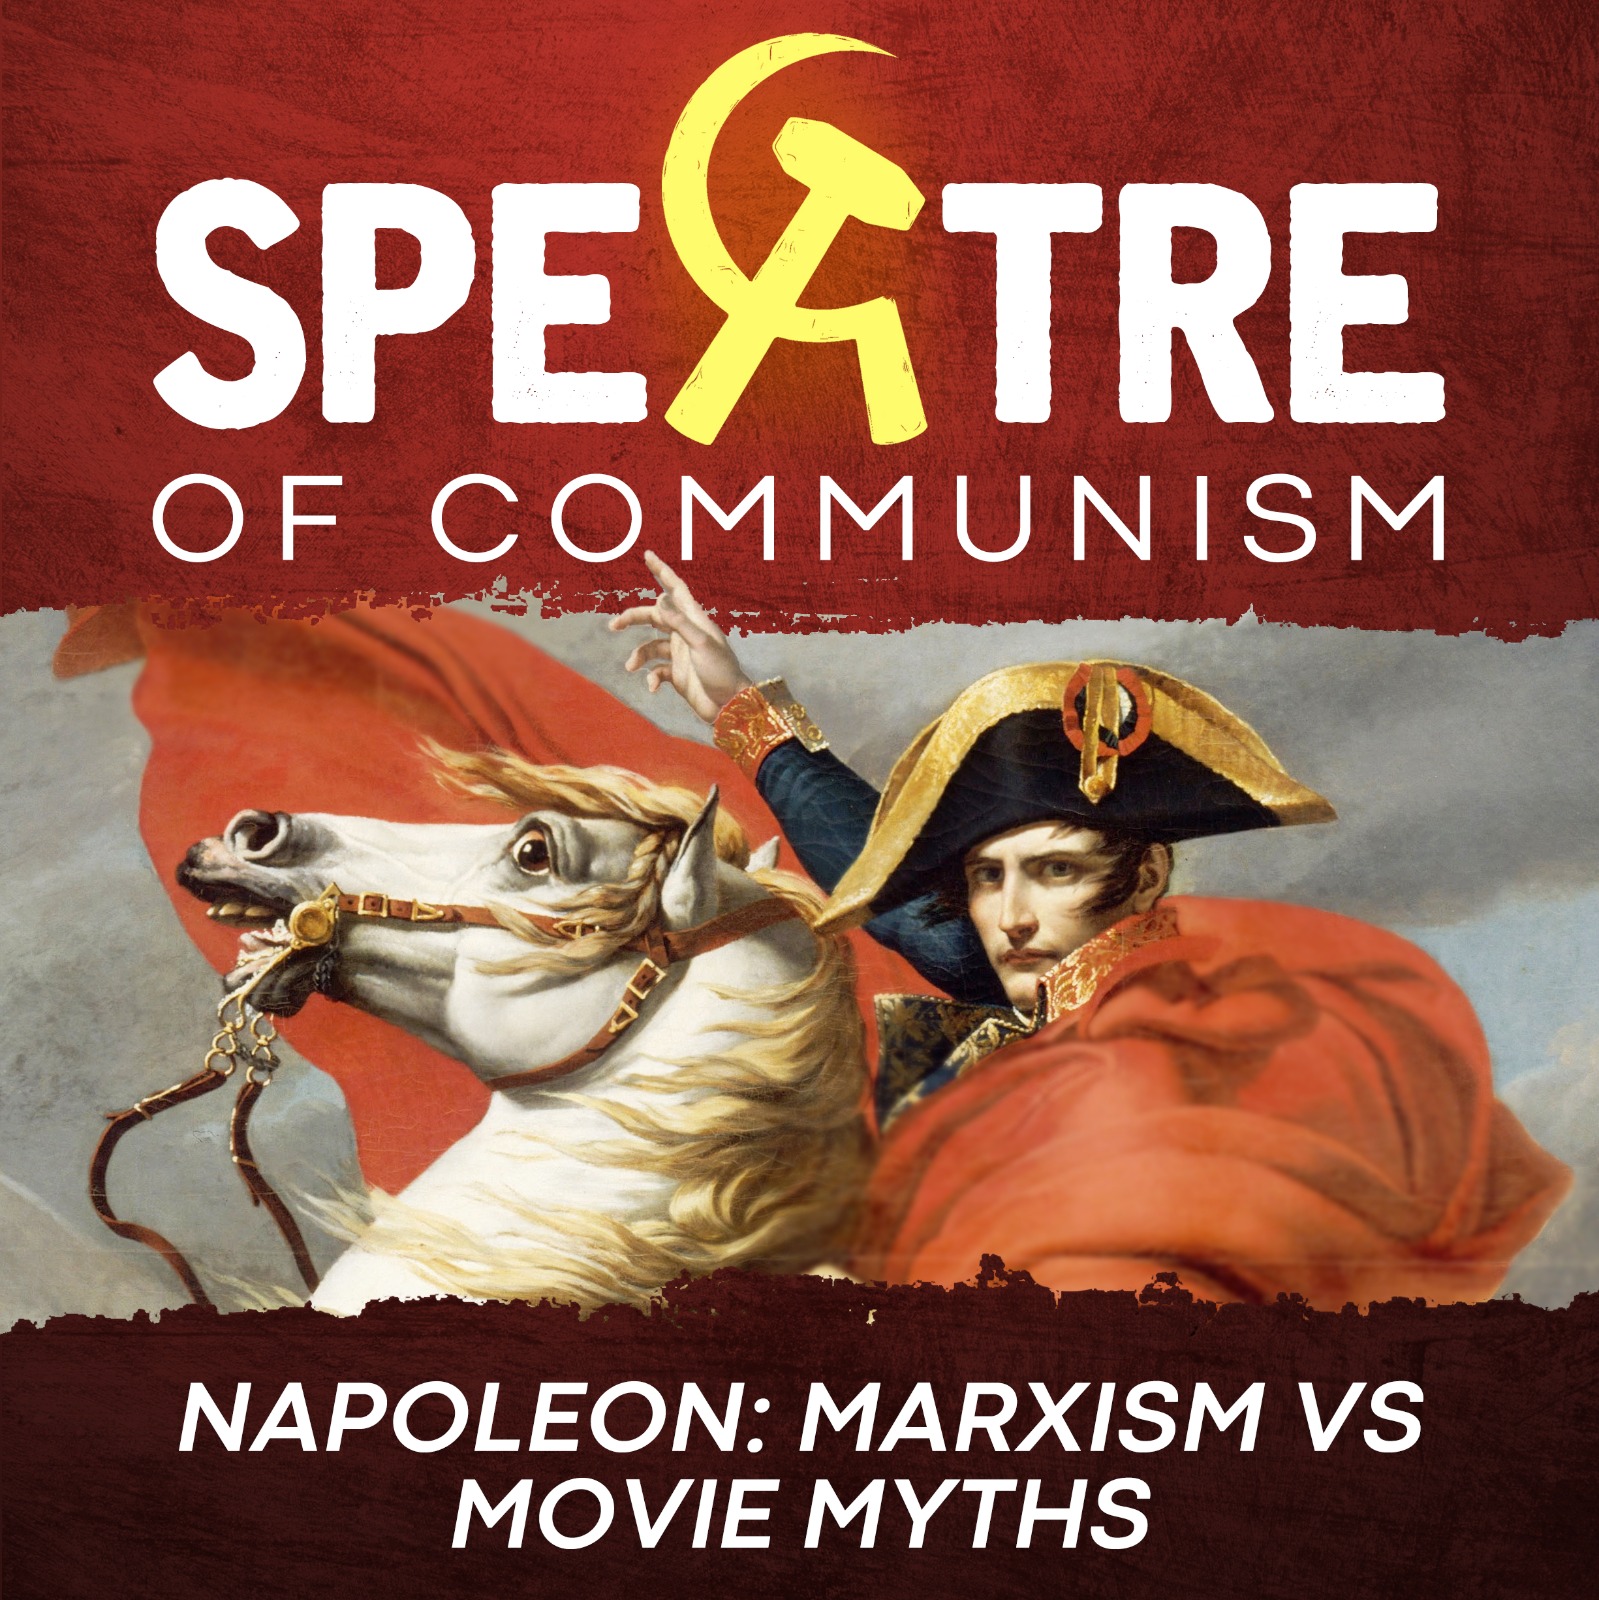 Napoleon: Marxism vs movie myths